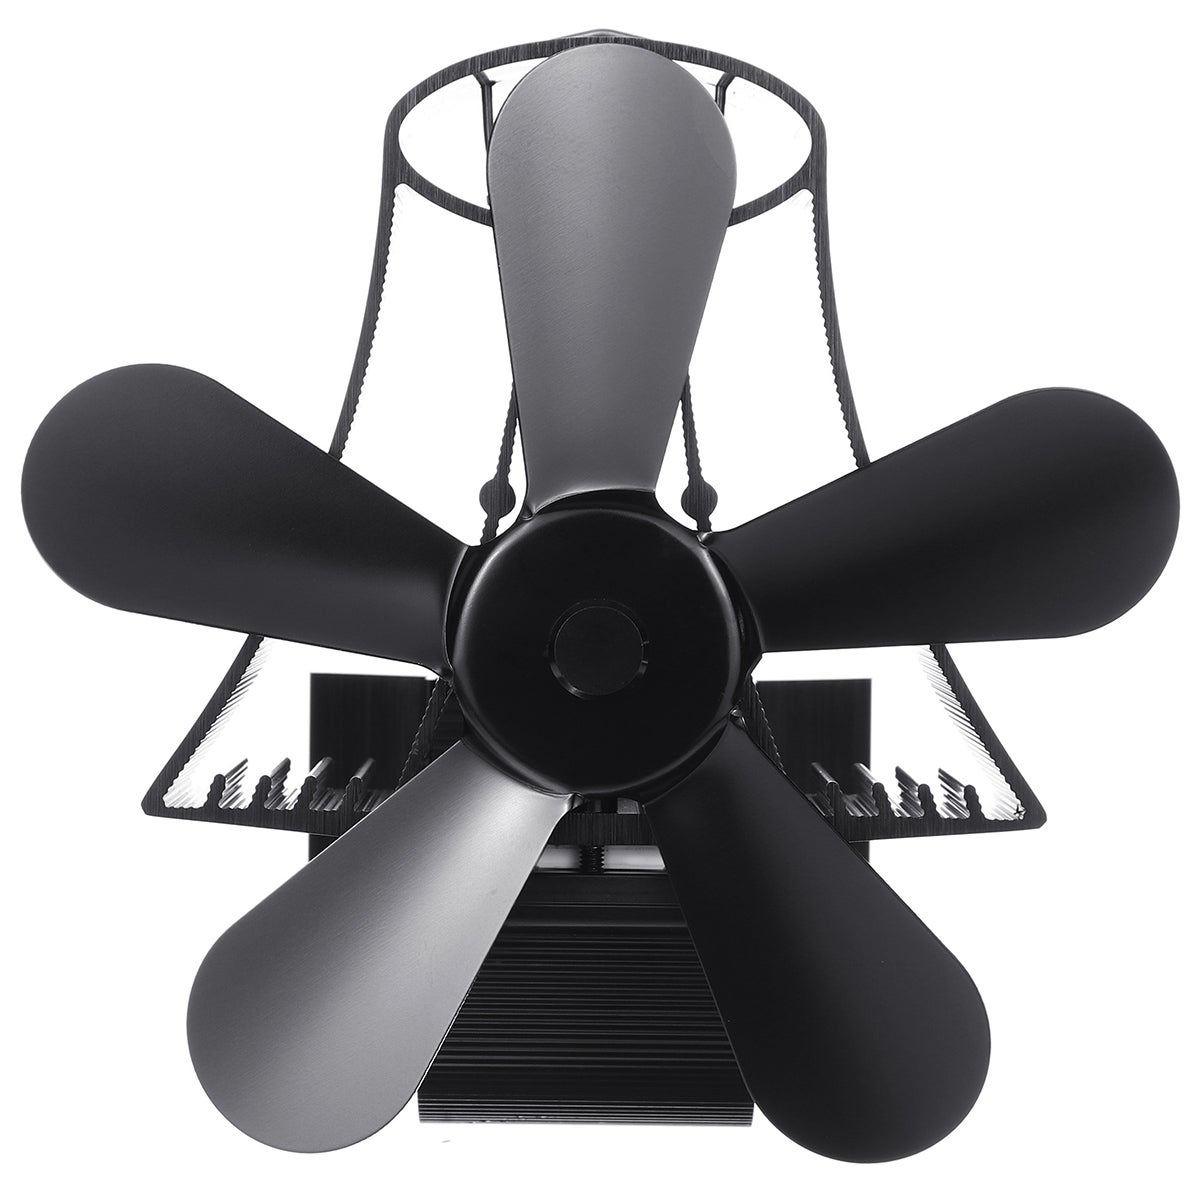 Cheminée ventilateur cheminée Ventilateur Air Chaud Ventilateur meuleuses dalap FN 150 5348 